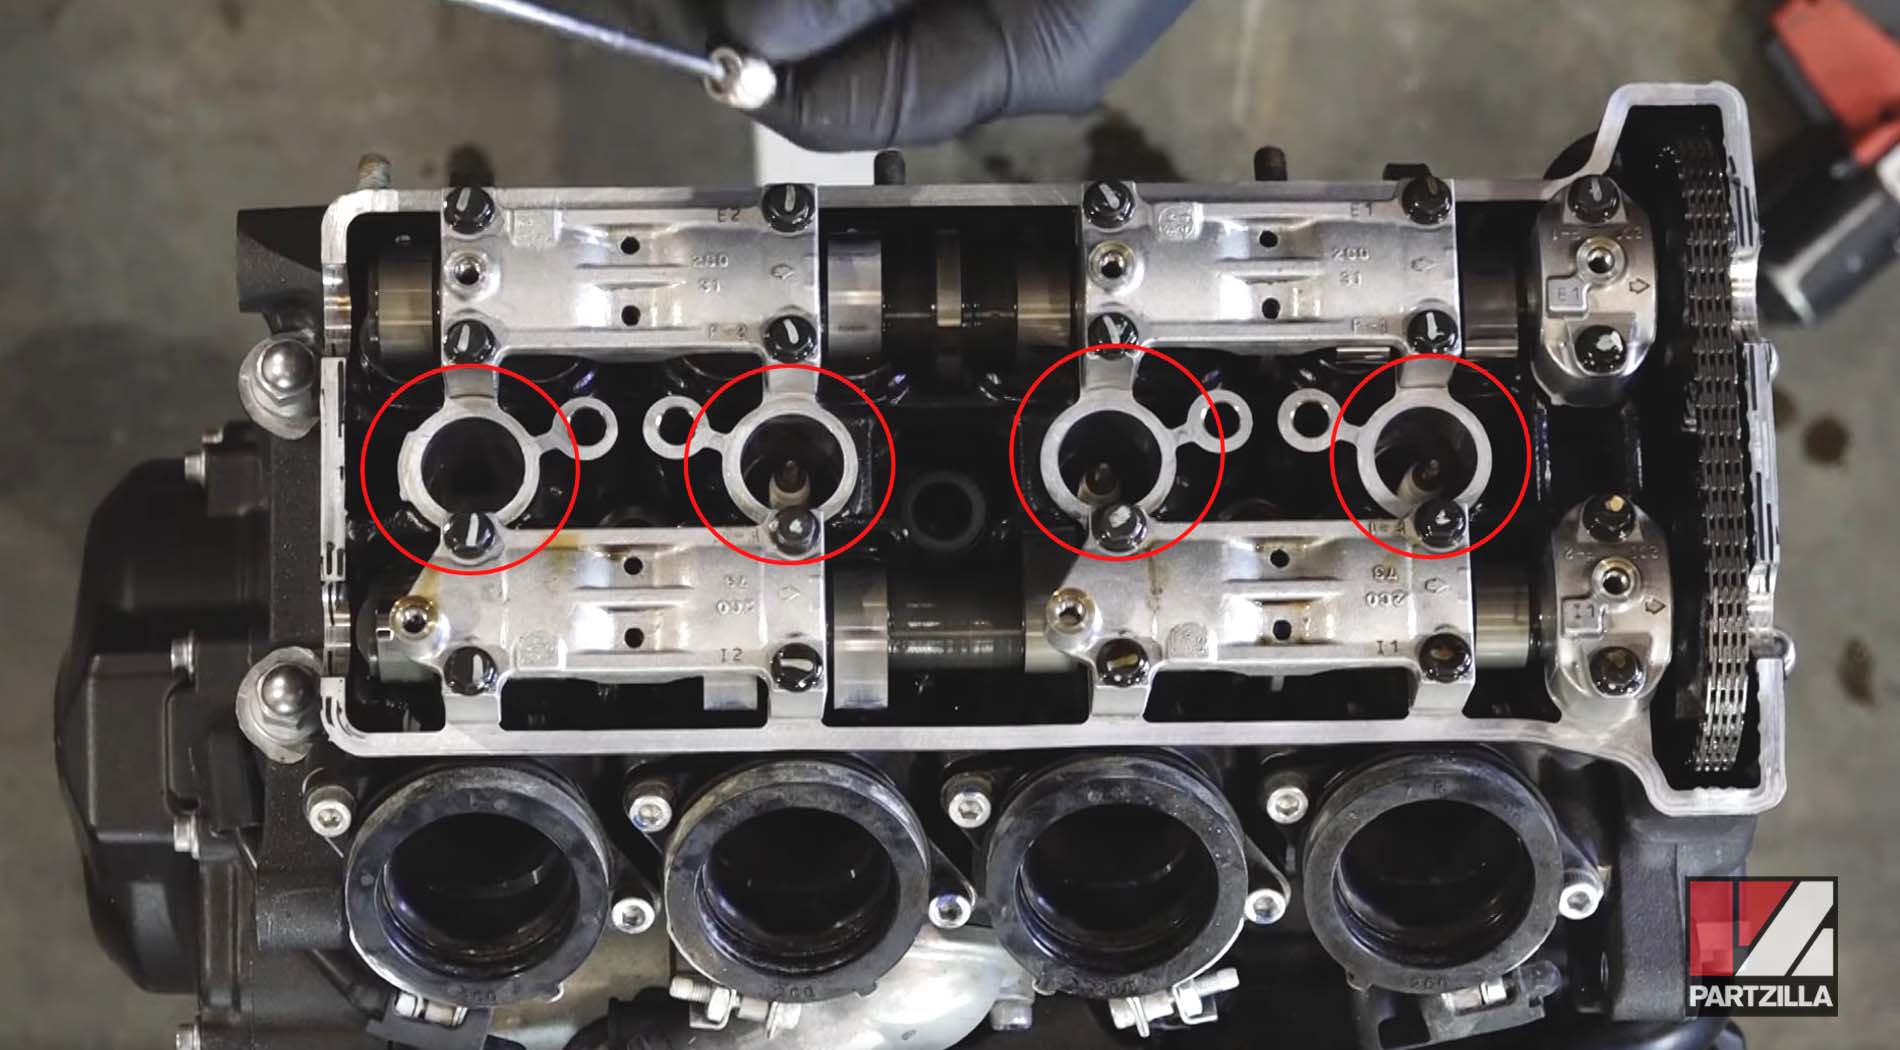 Yamaha R6 cam timing spark plug removal